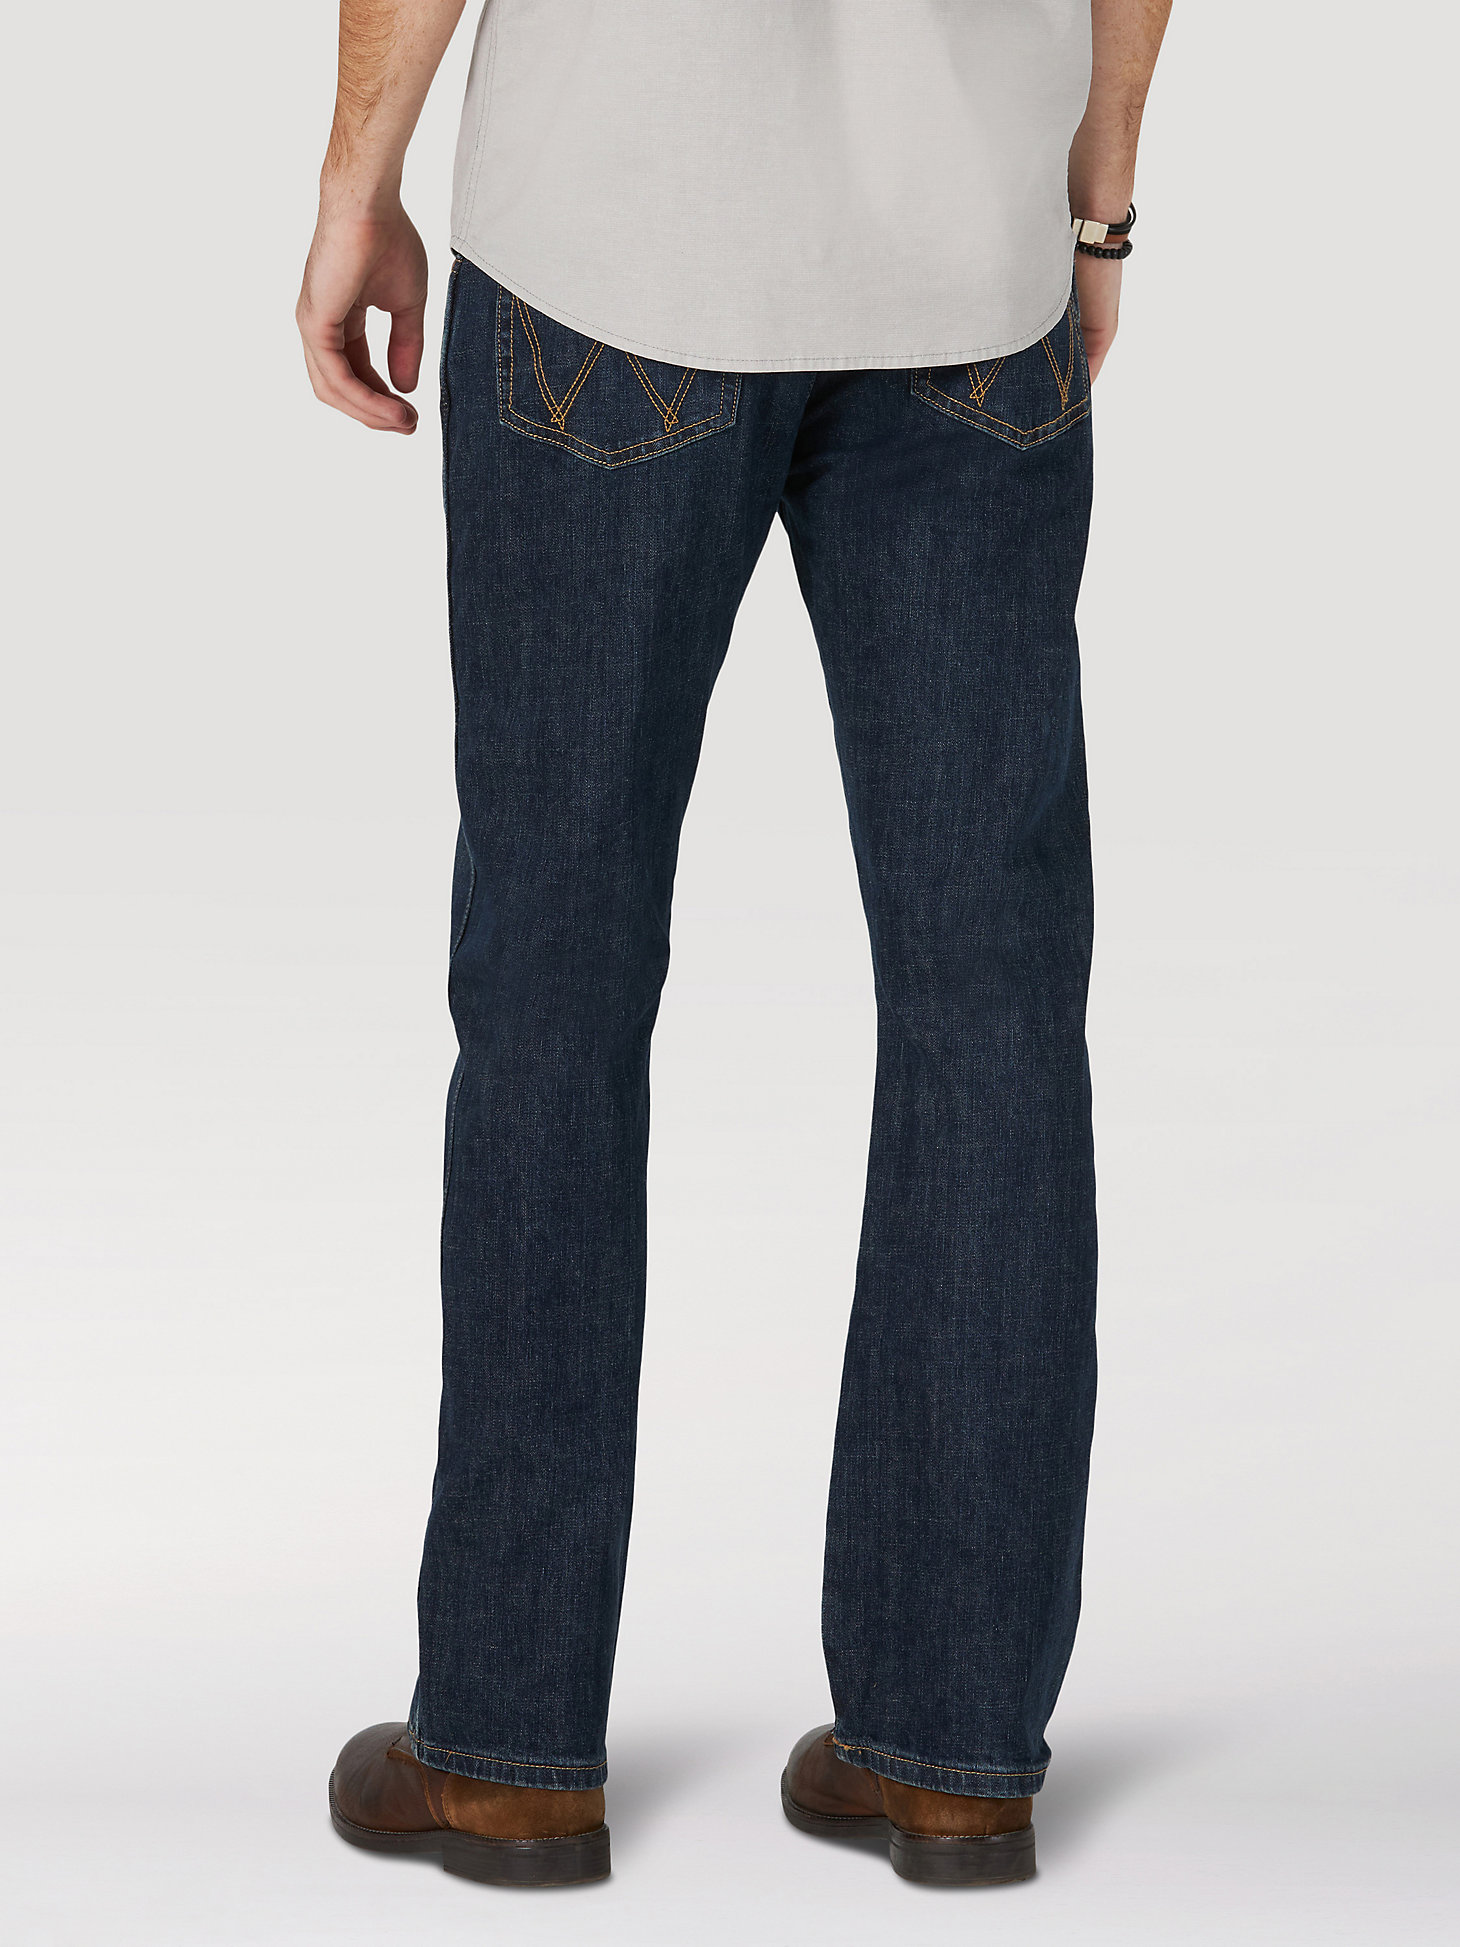 Men's Slim Fit Bootcut Jeans in CB Wash alternative view 1